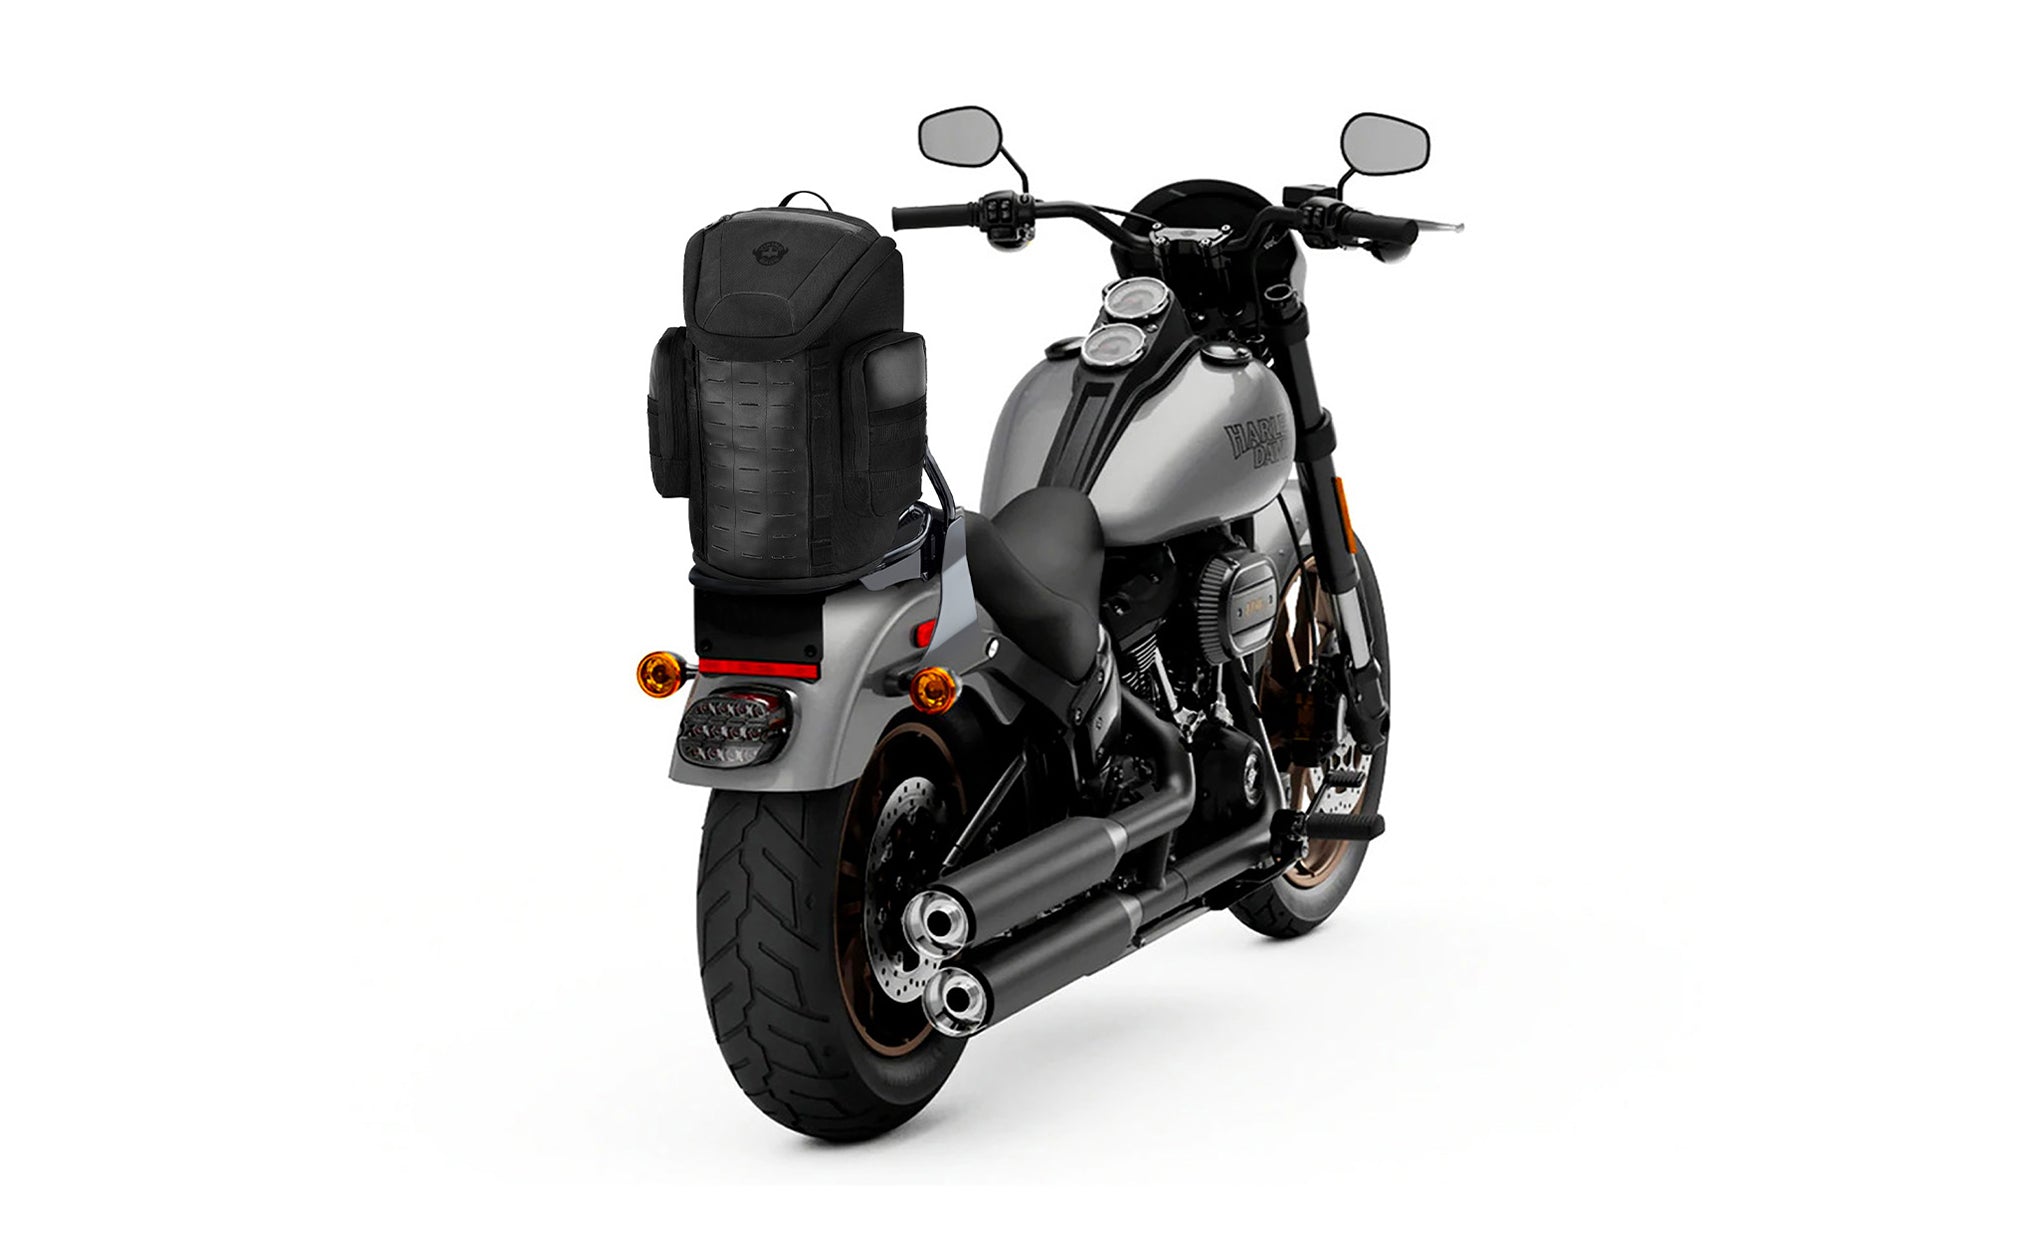 Viking Patriot Medium Yamaha Motorcycle Sissy Bar Backpack Bag on Bike View @expand